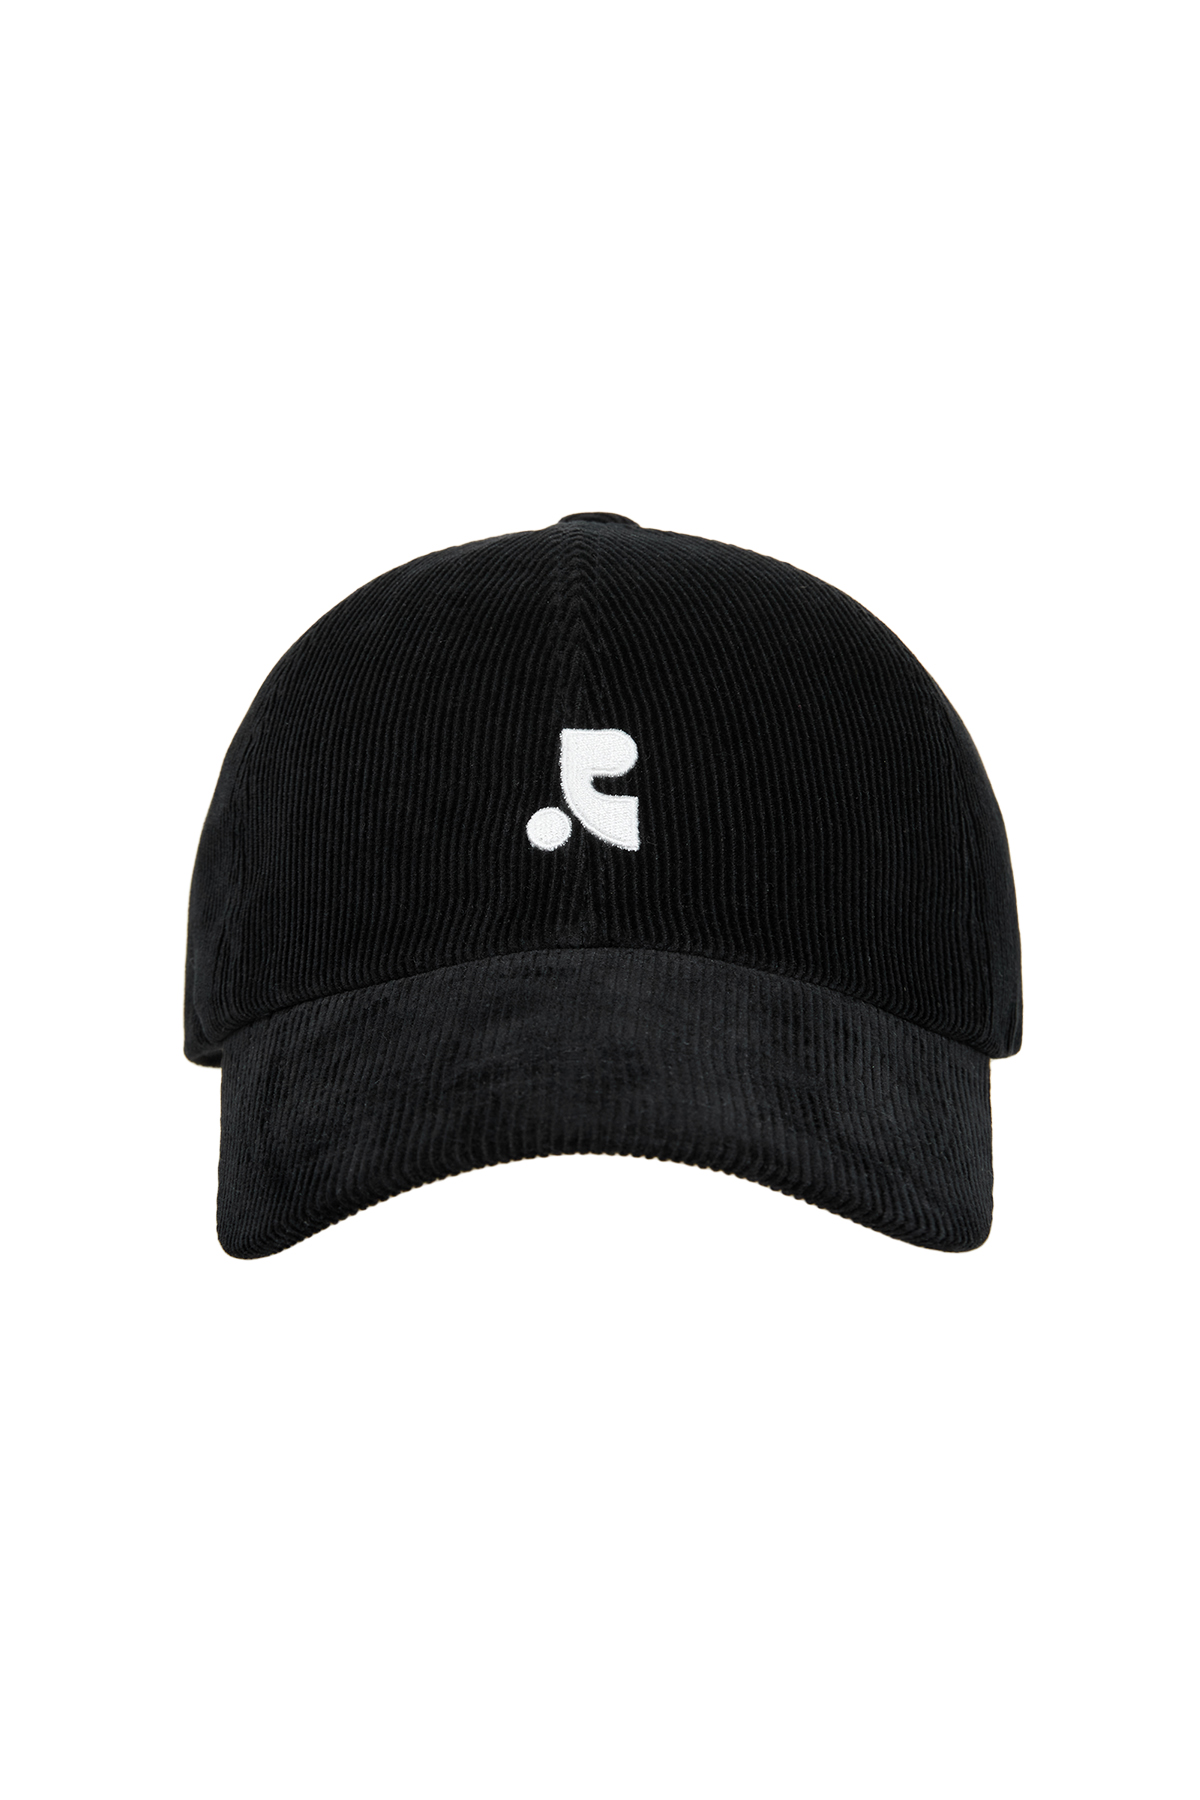 RR CORDUROY BALL CAP - BLACK